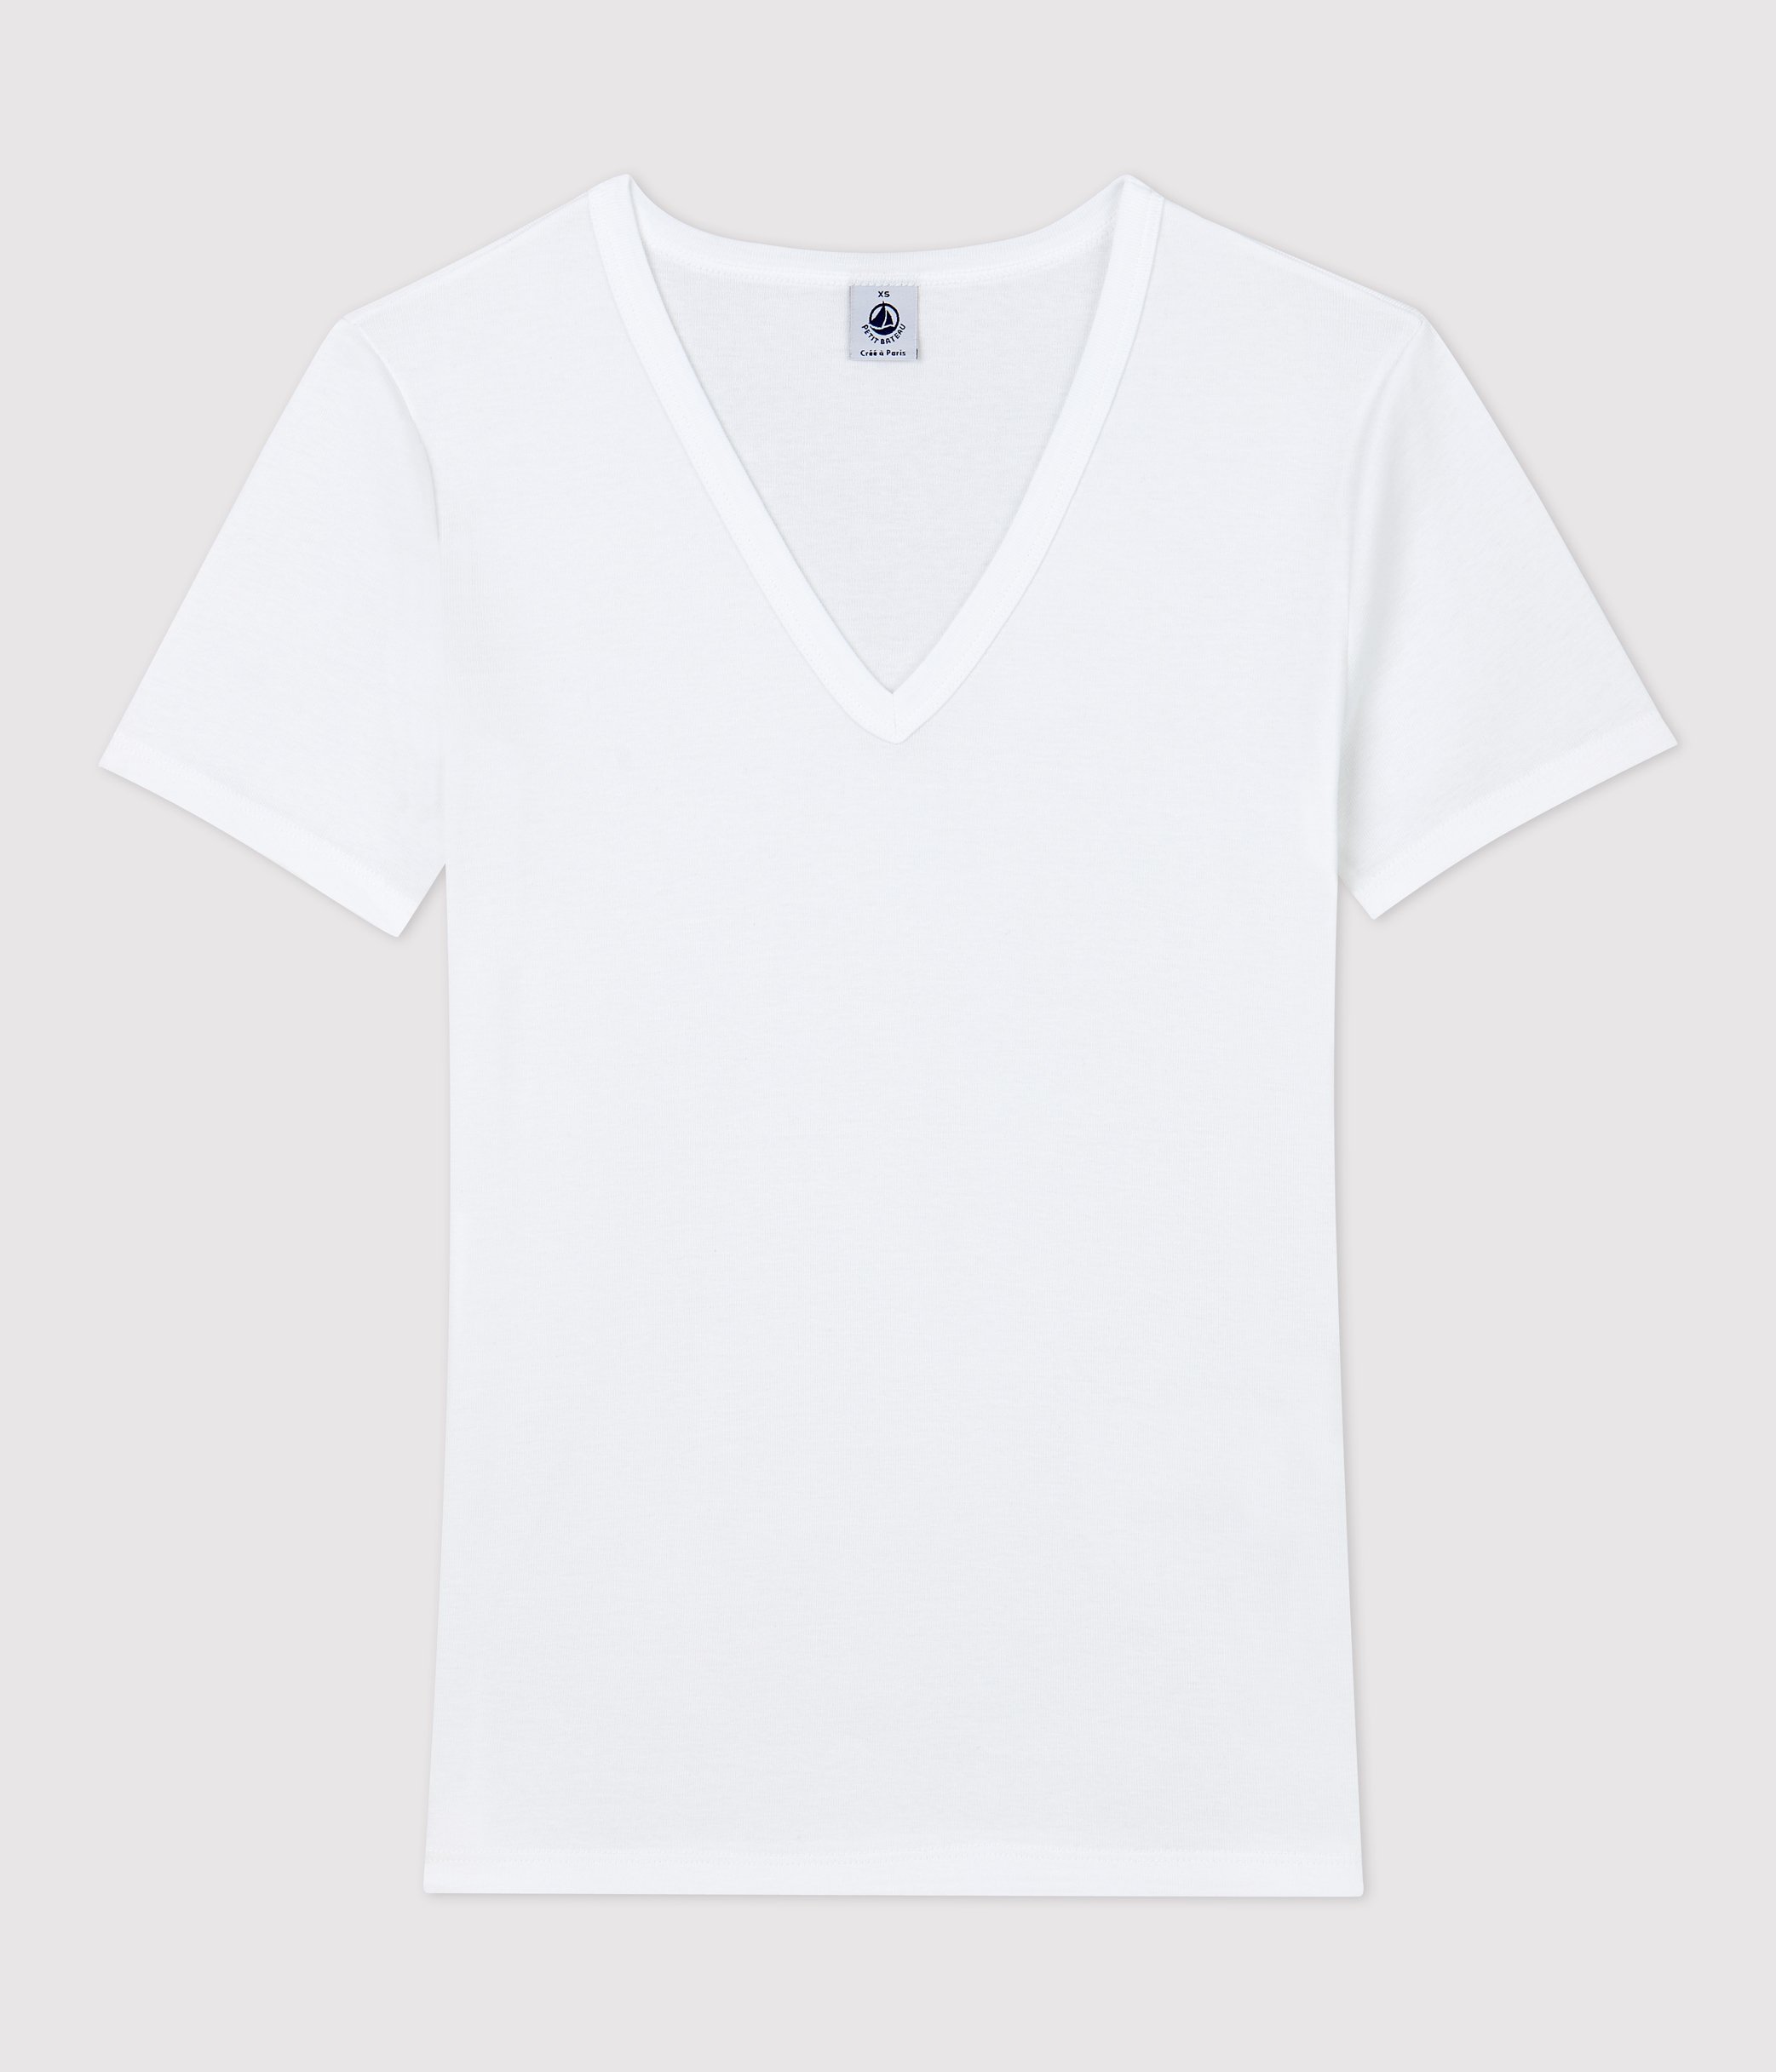 Eng anliegendes T-Shirt mit V-Ausschnitt aus Baumwolle für Damen ECUME |  Petit Bateau